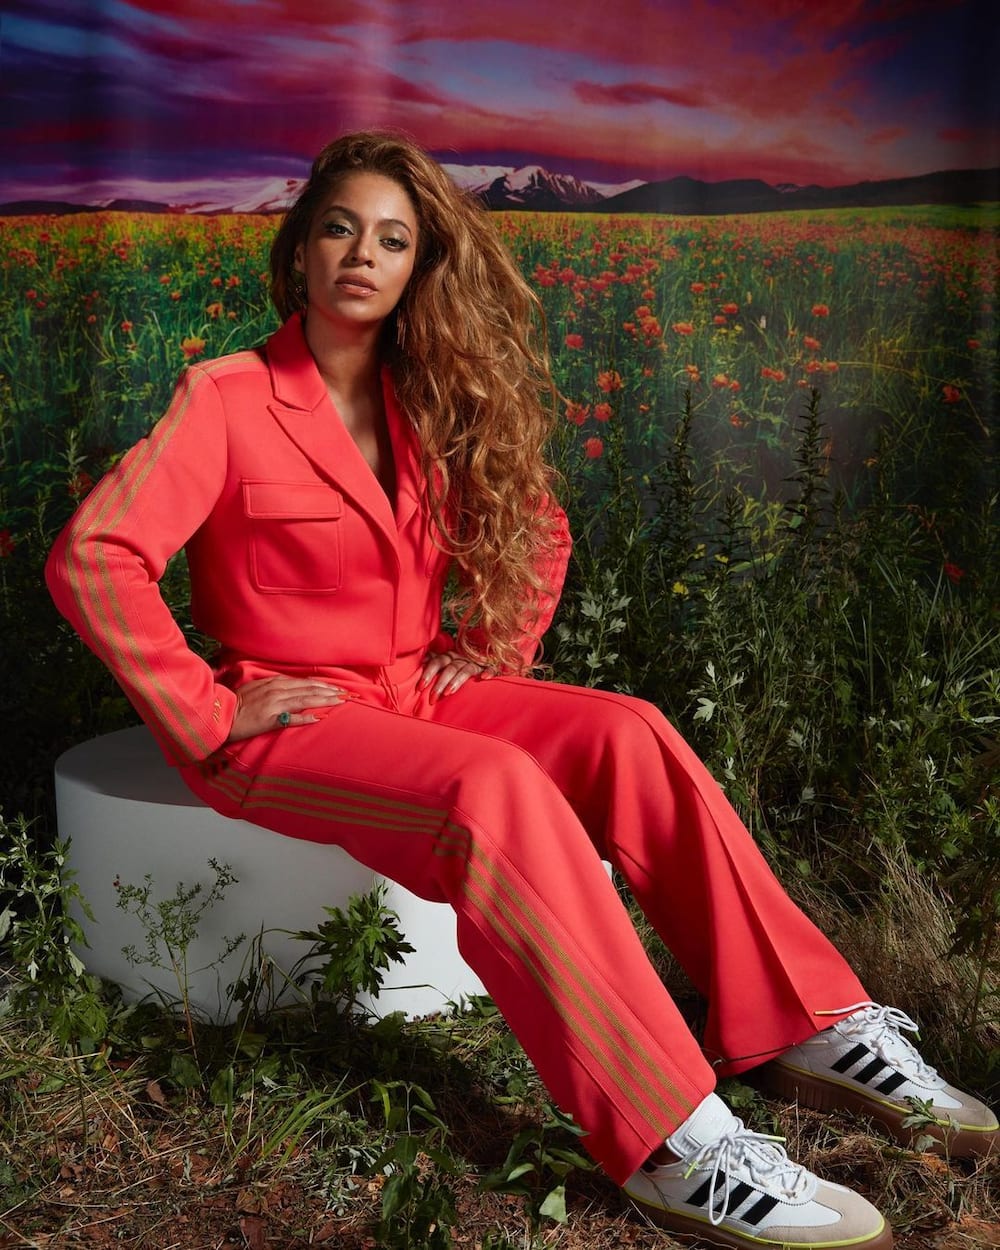 Beyoncé Knowles-Carter